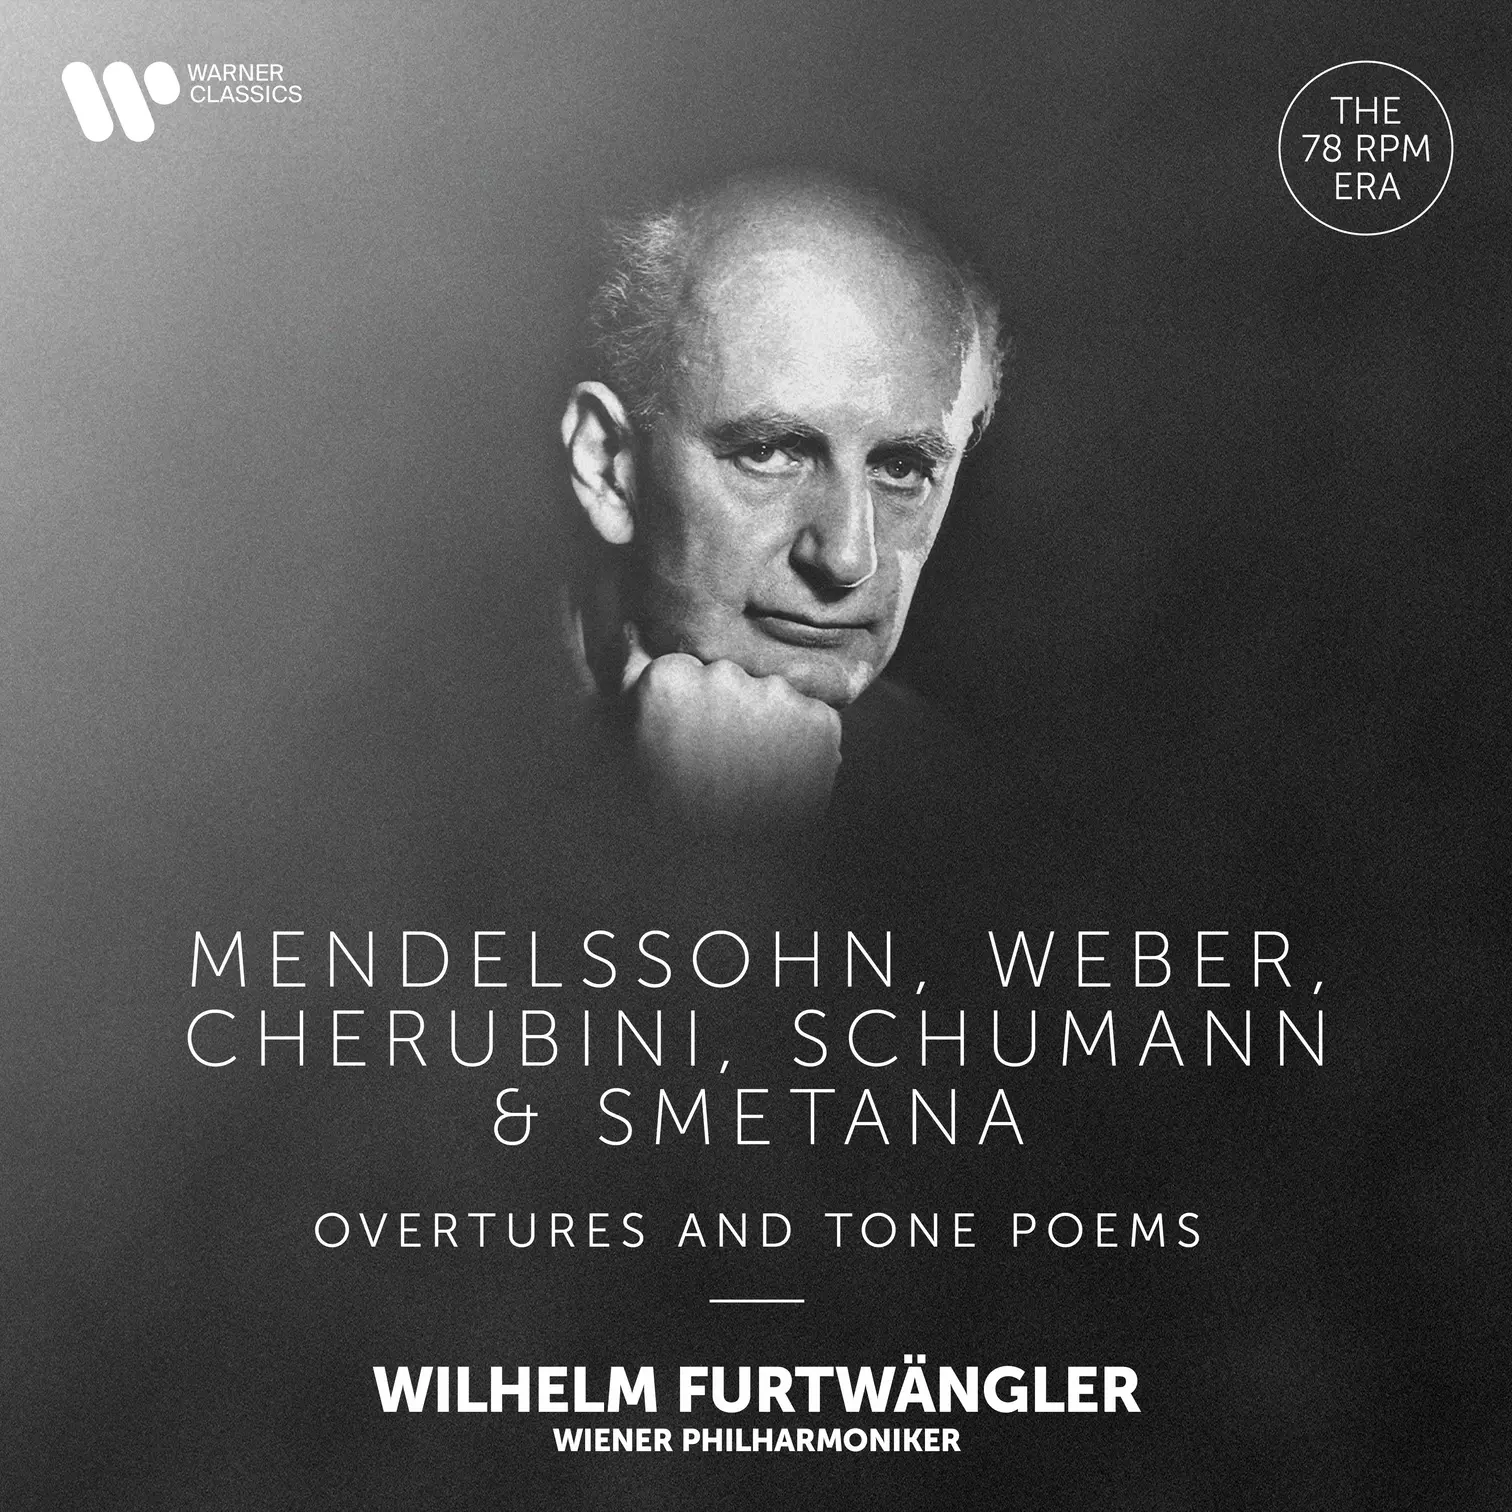 Mendelssohn, Weber, Cherubini, Schumann & Smetana: Overtures and Tone Poems